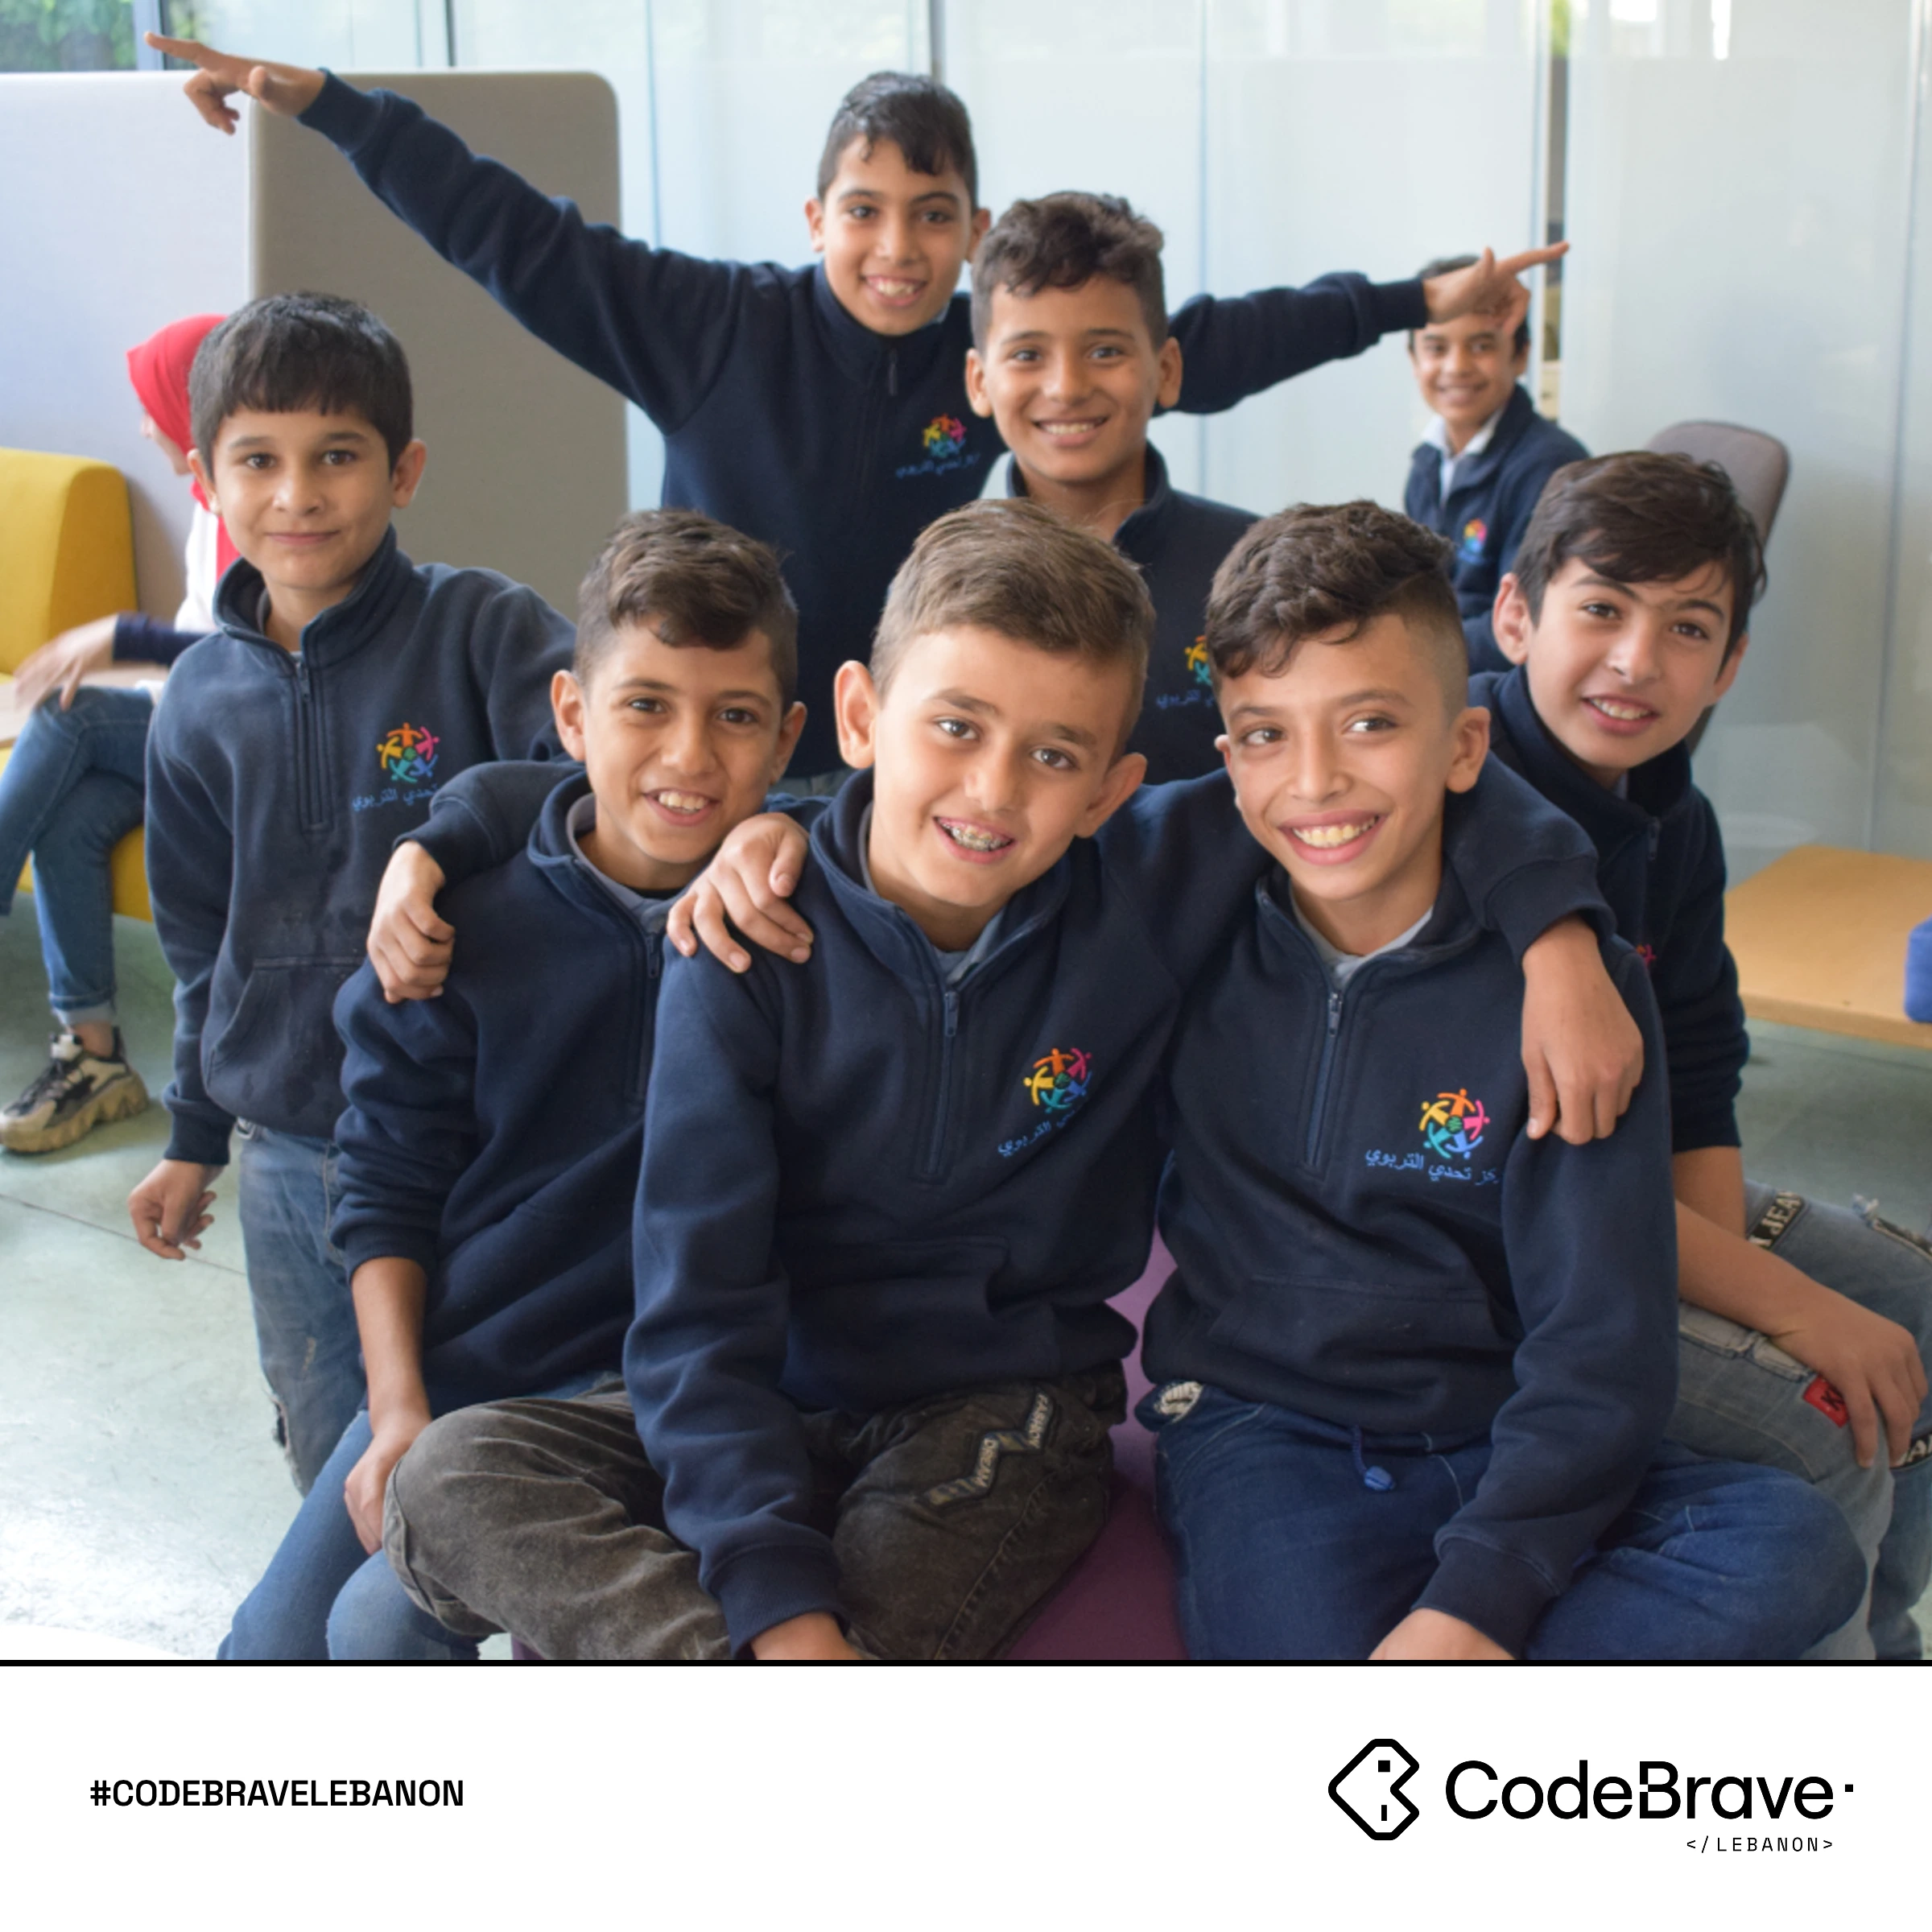 CodeBrave - Powering Lebanon's next generation with tech skills